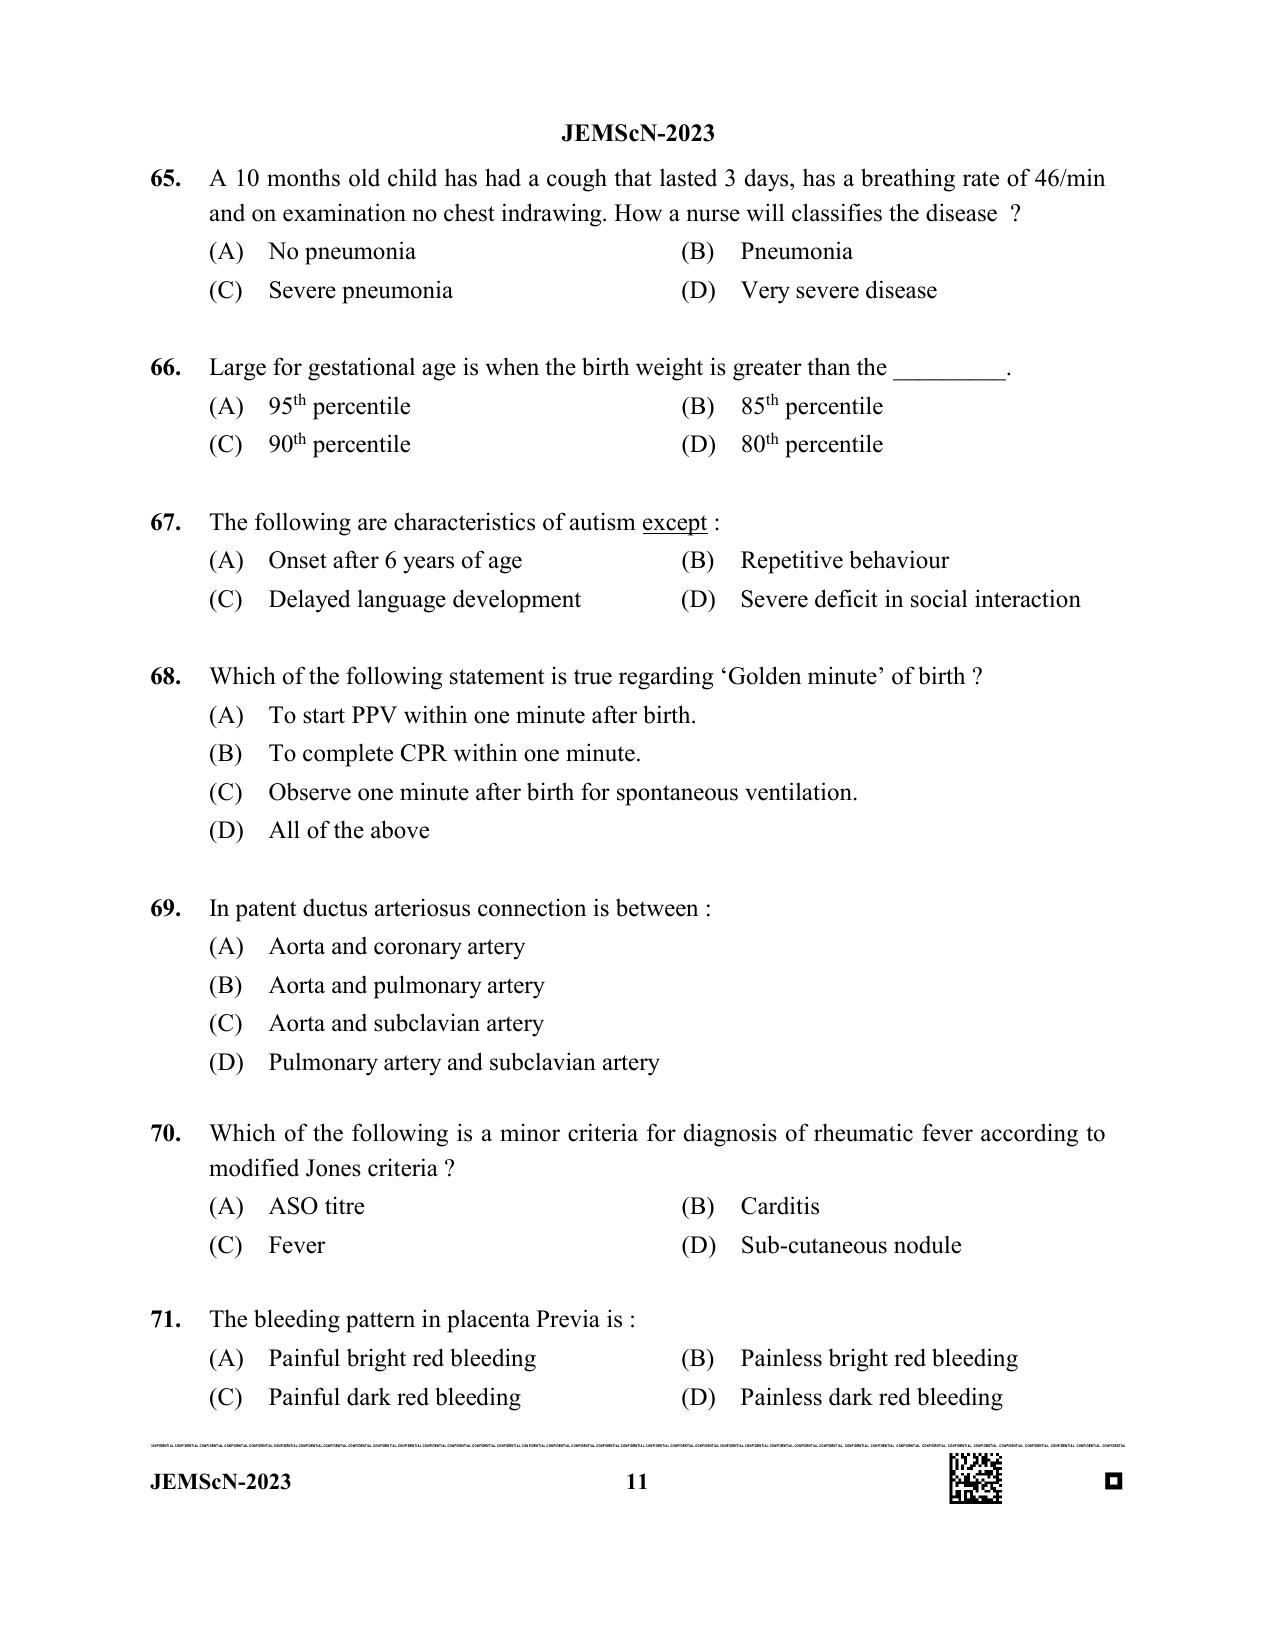 WB JEMScN 2023 Question Paper - Page 11